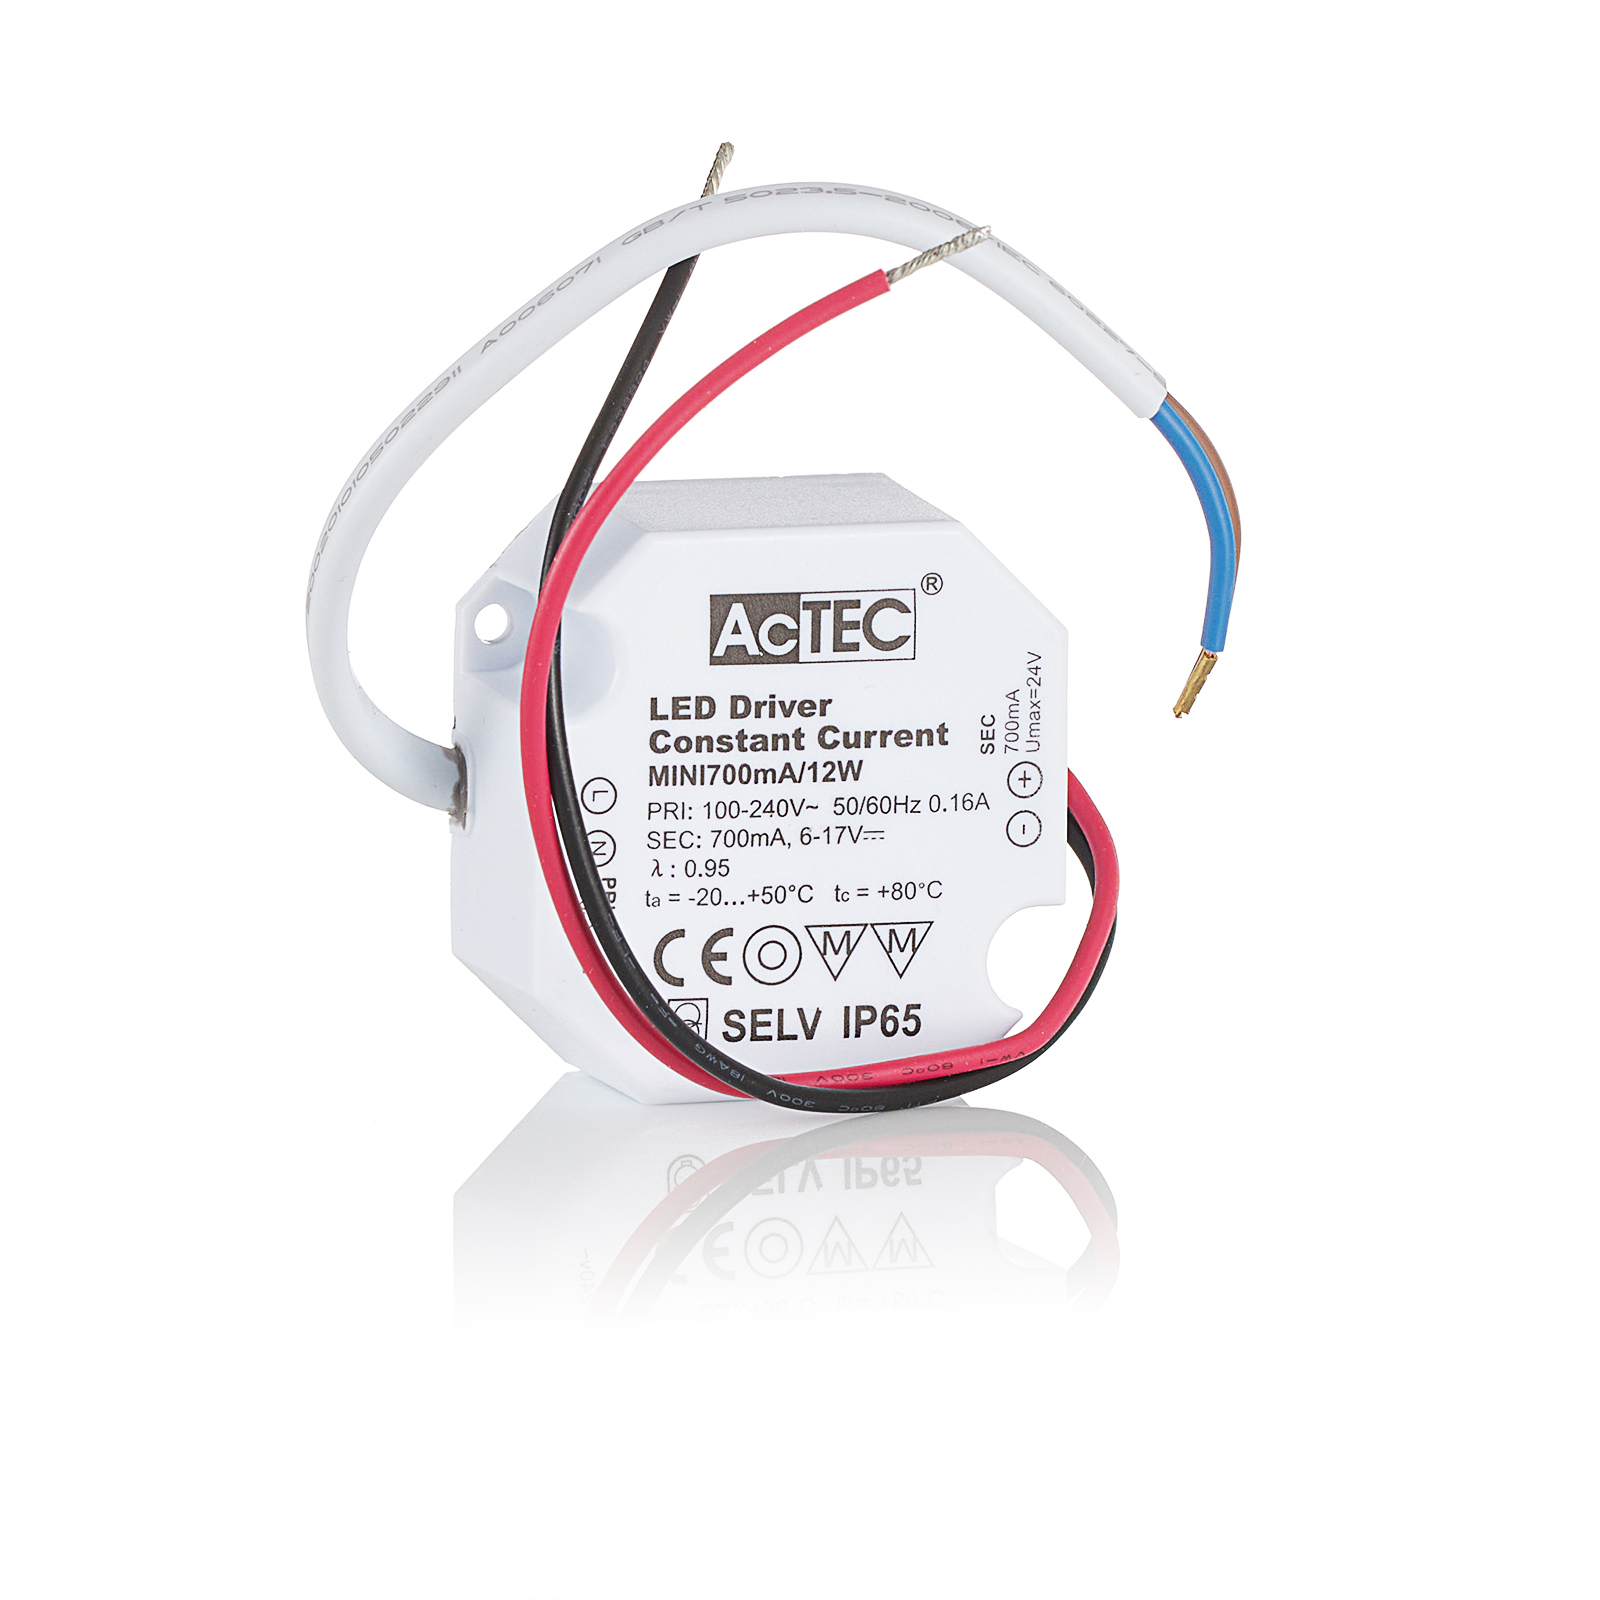 AcTEC Mini LED draiver CC 700mA, 12W, IP65